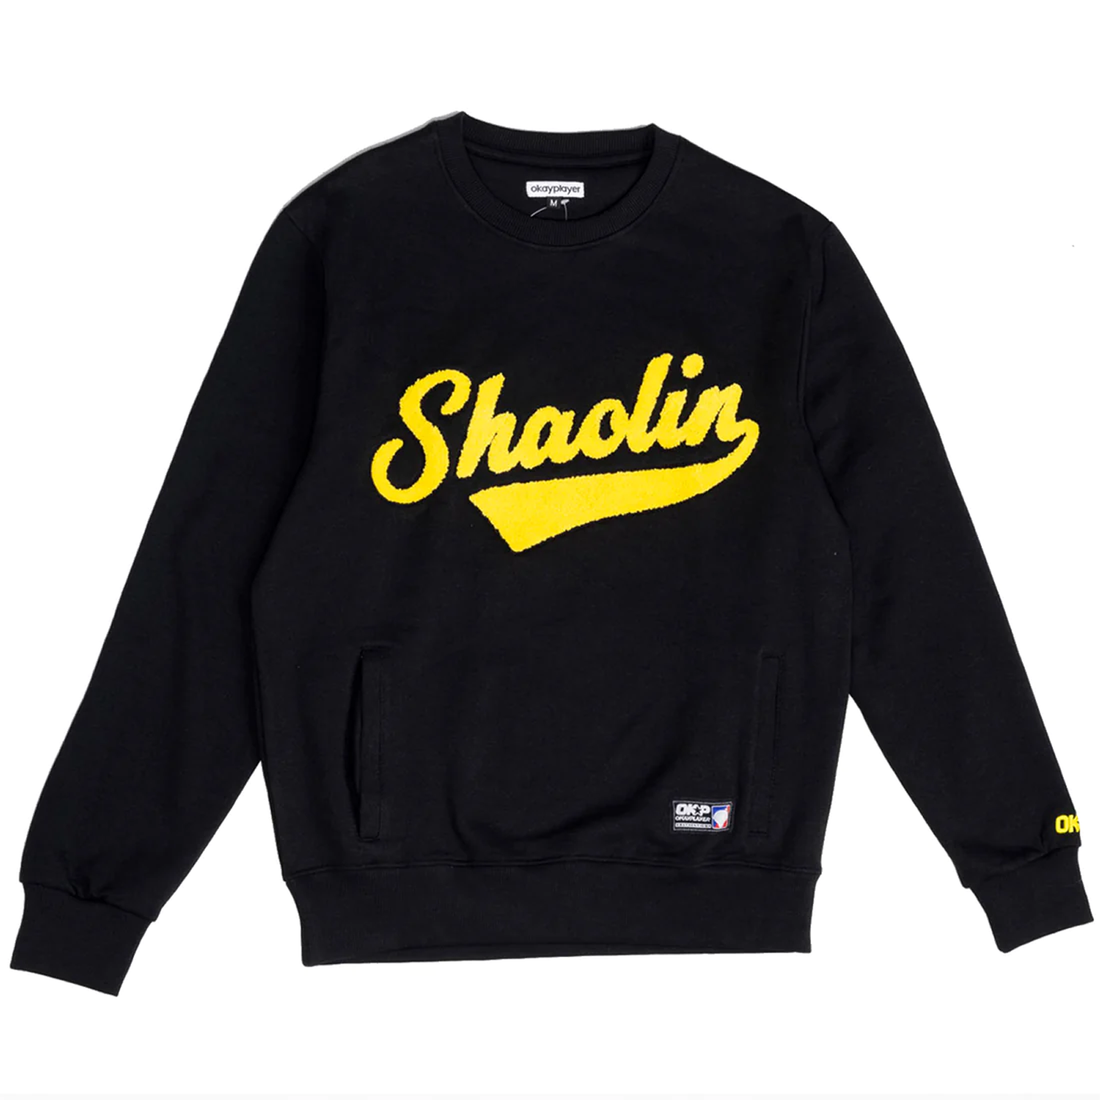 Shaolin Chenille Crewneck Sweatshirt